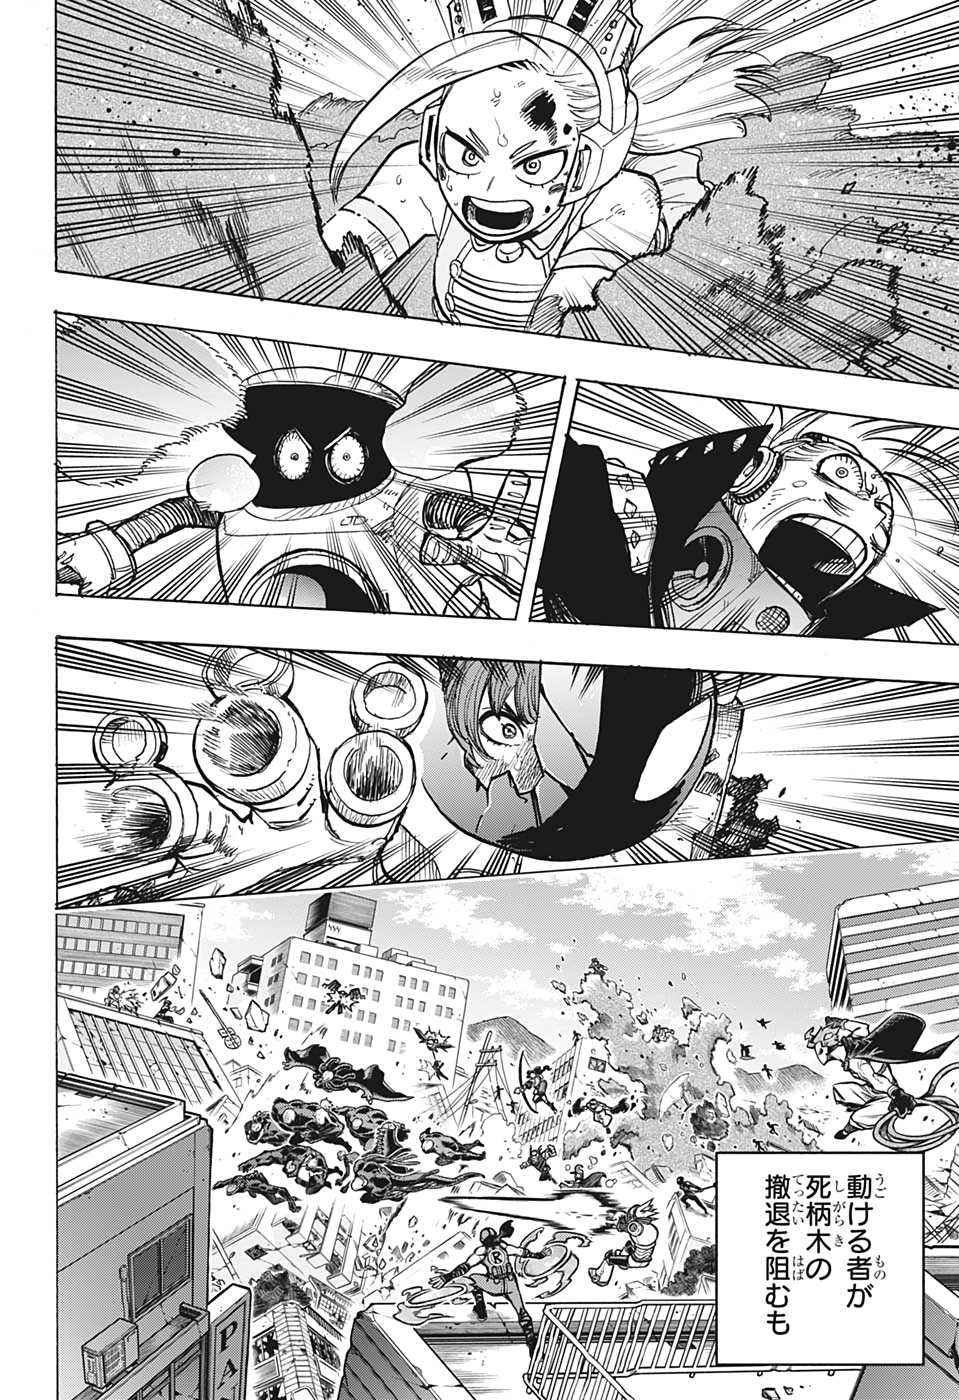 Boku no Hero Academia - Chapter 296 - Page 2